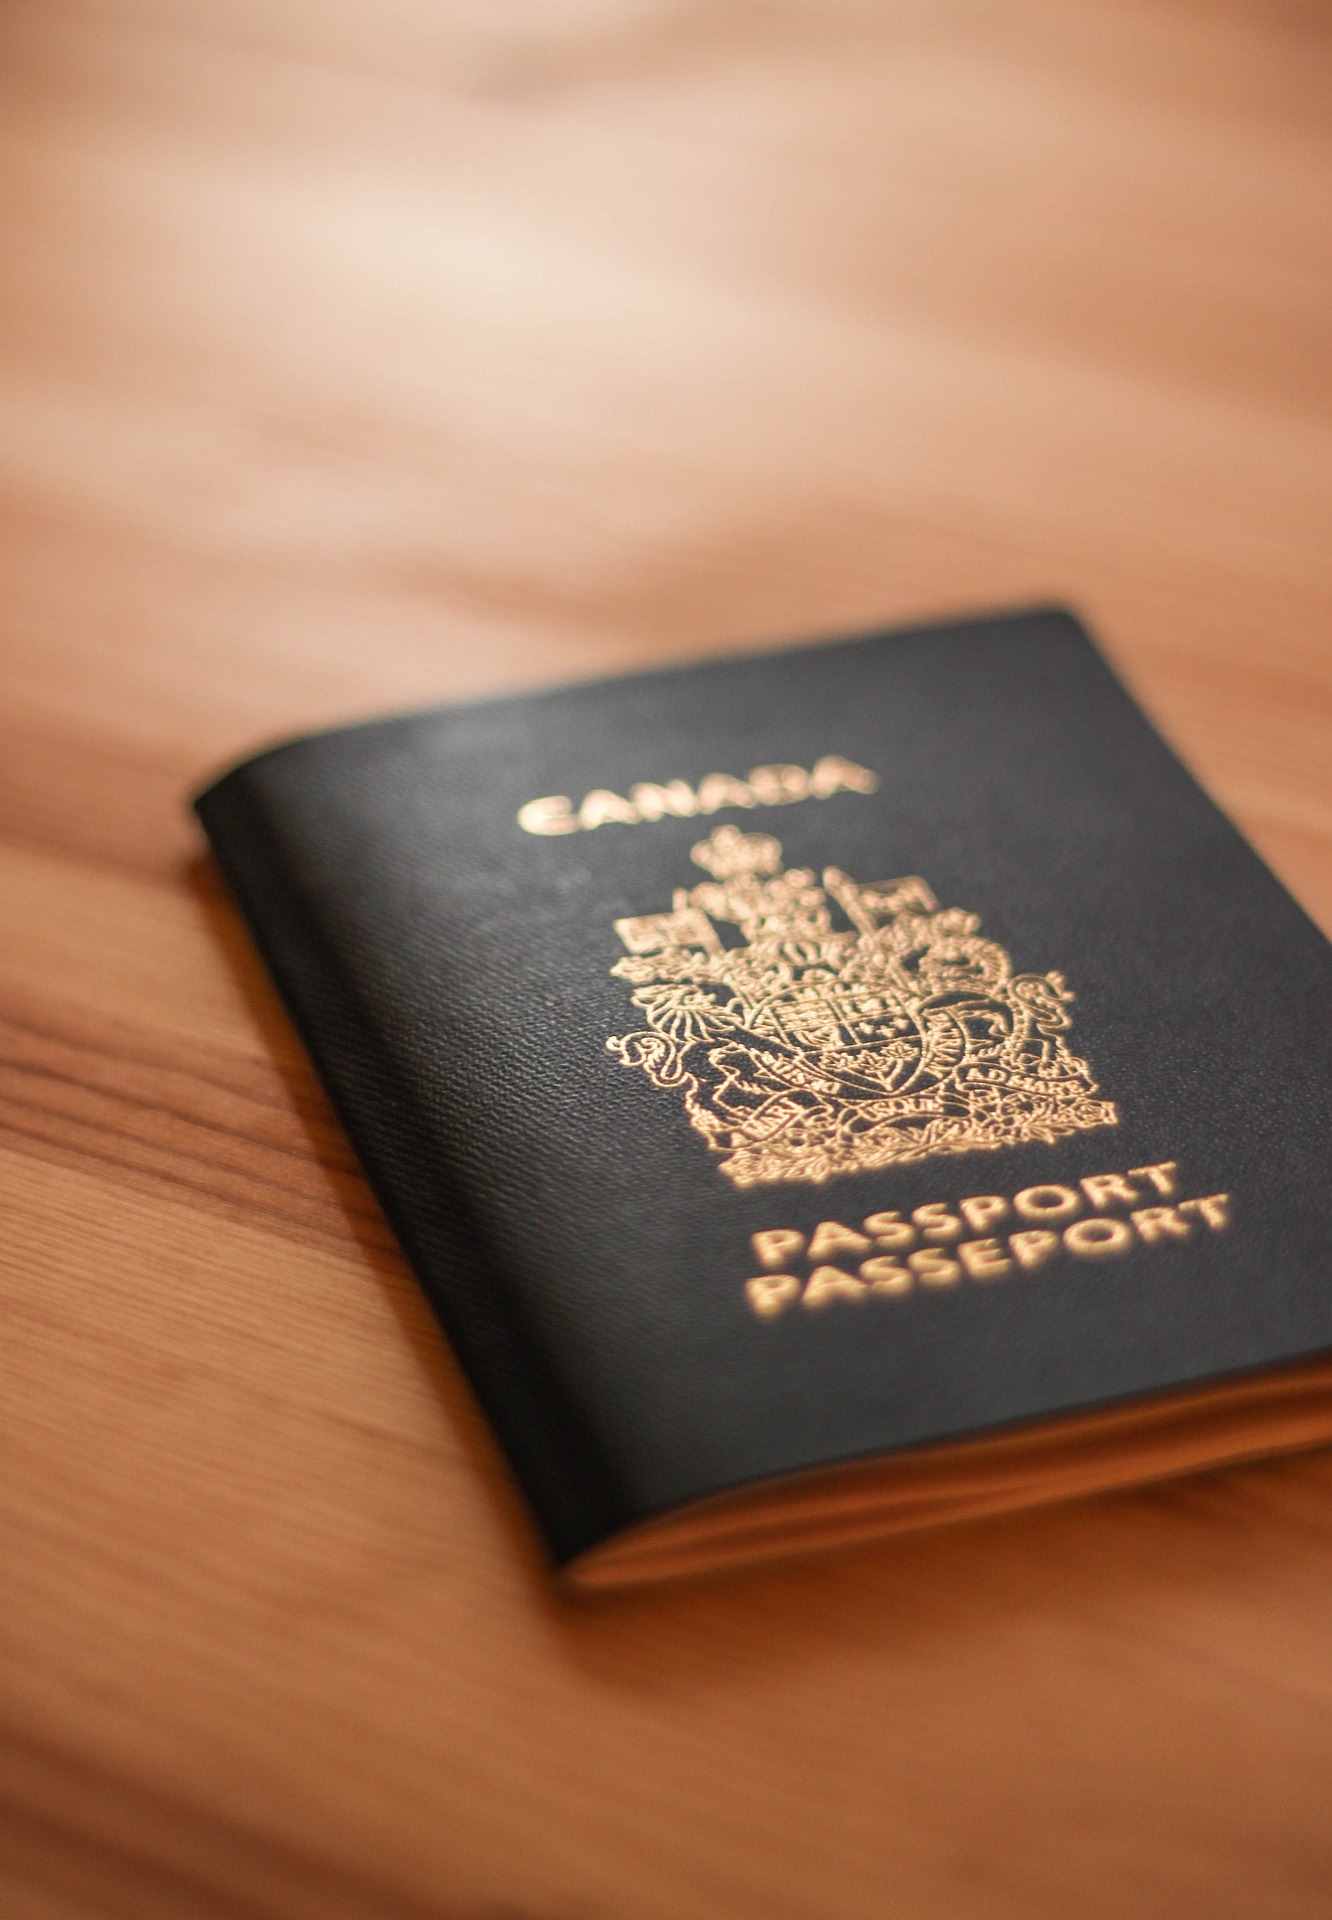 canadian passports